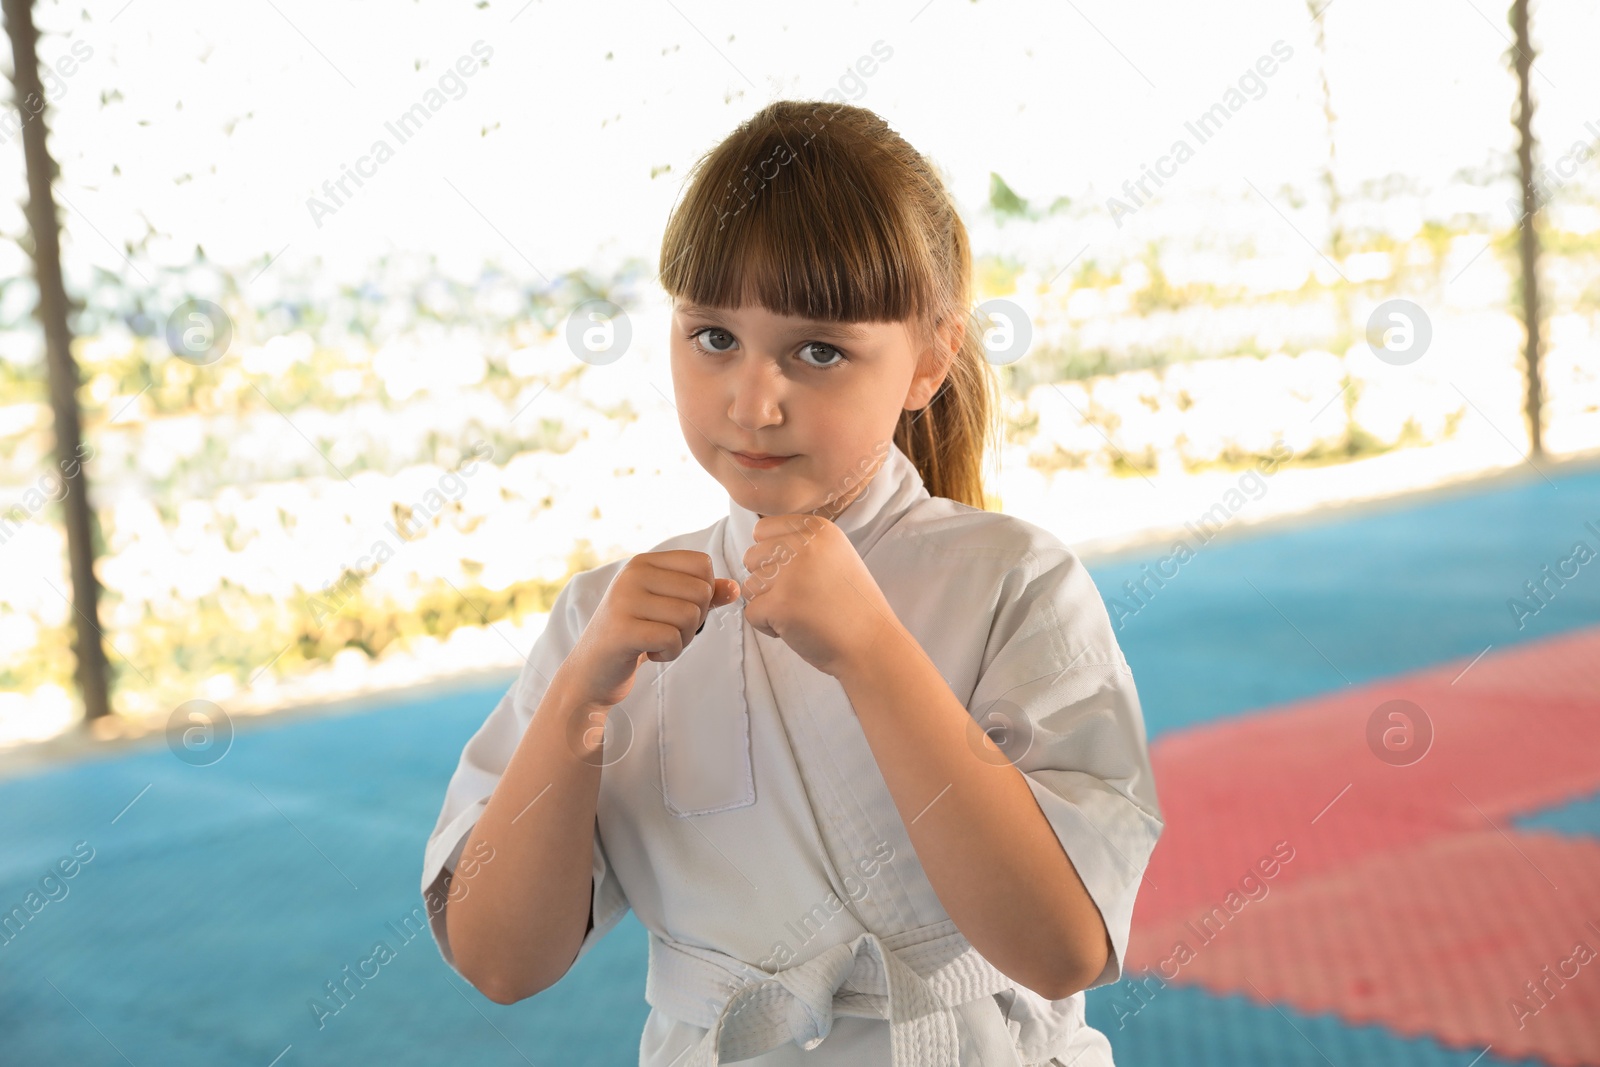 Photo of Girl in kimono practicing karate on tatami outdoors